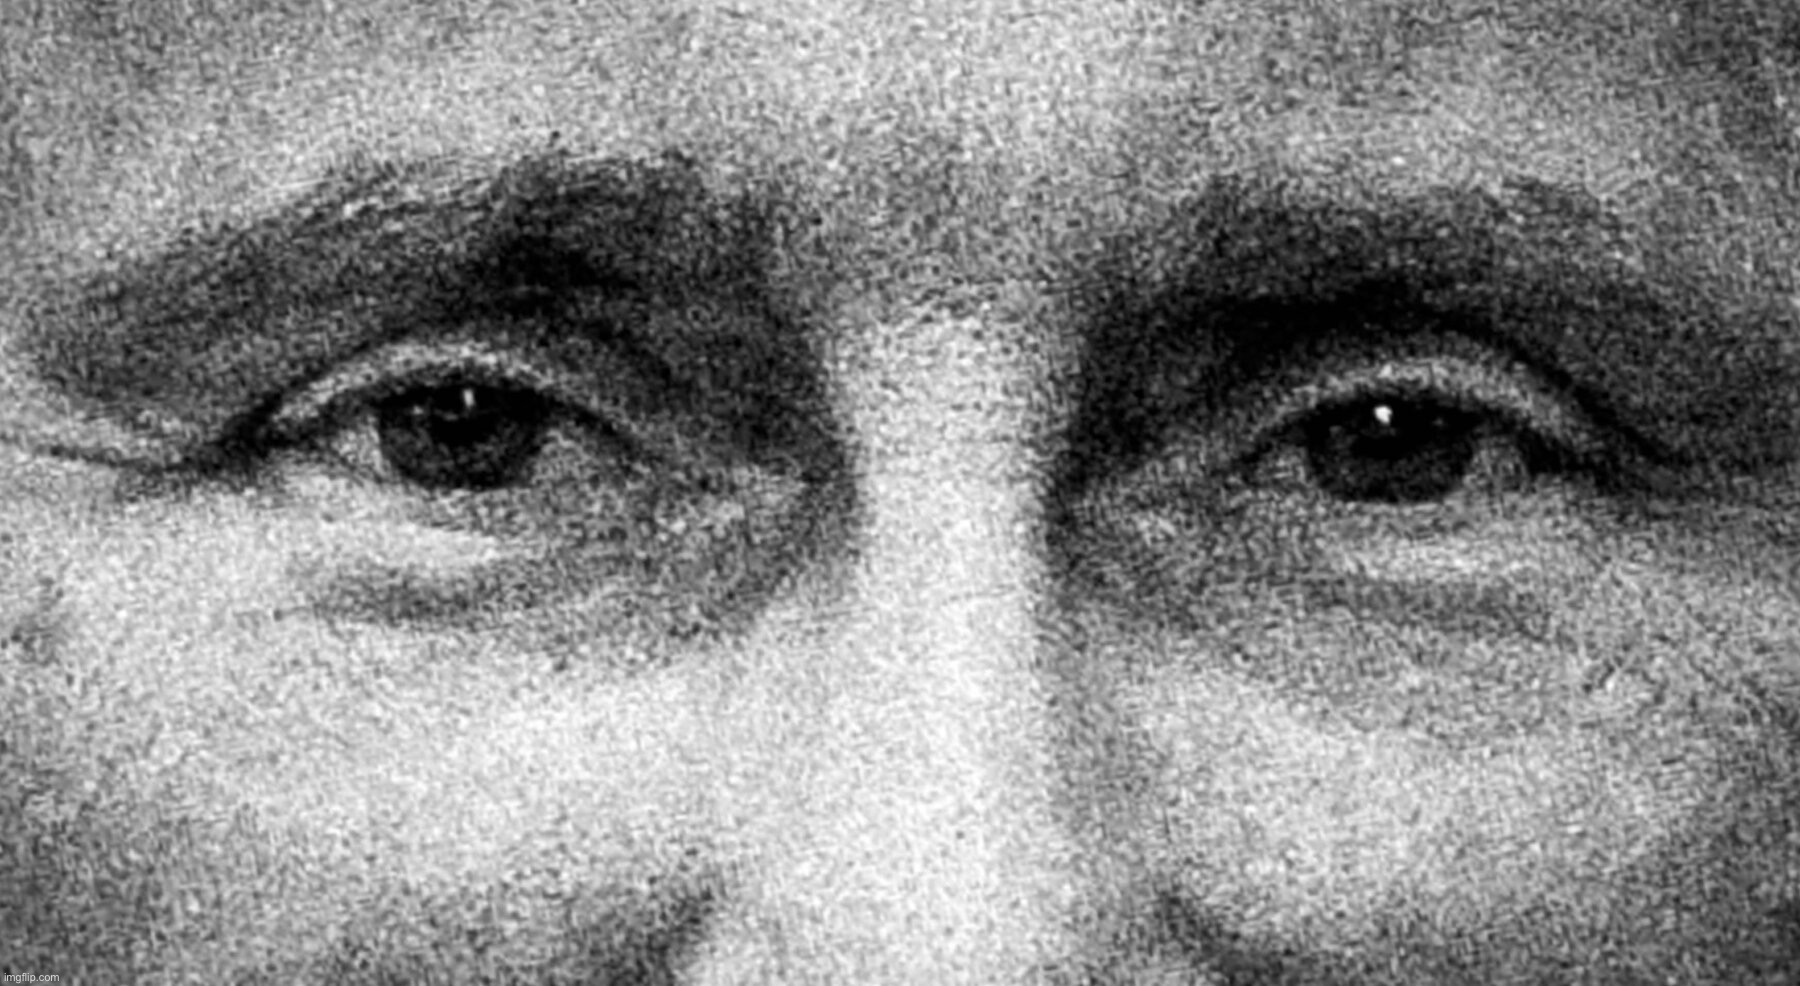 Vladimir Putin creepy eyes | image tagged in vladimir putin creepy eyes | made w/ Imgflip meme maker